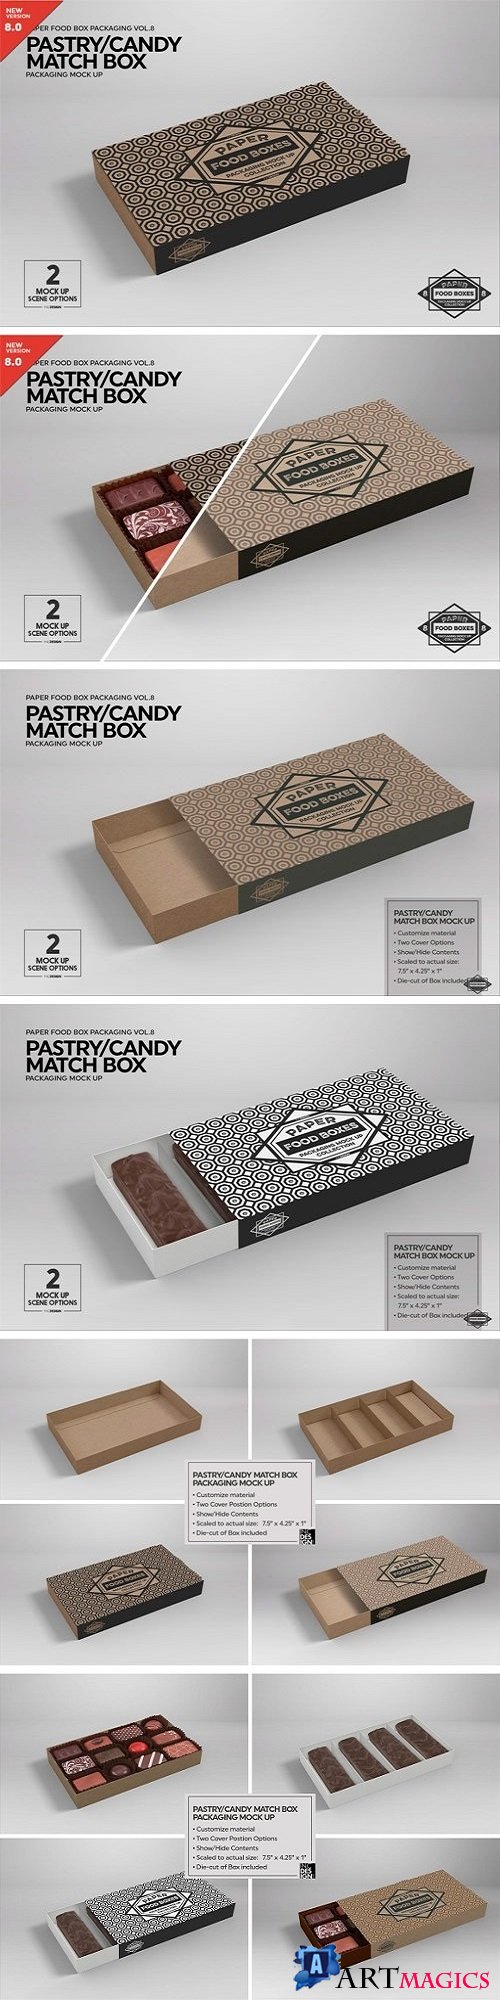 Match Box Style Packaging MockUp 2181811